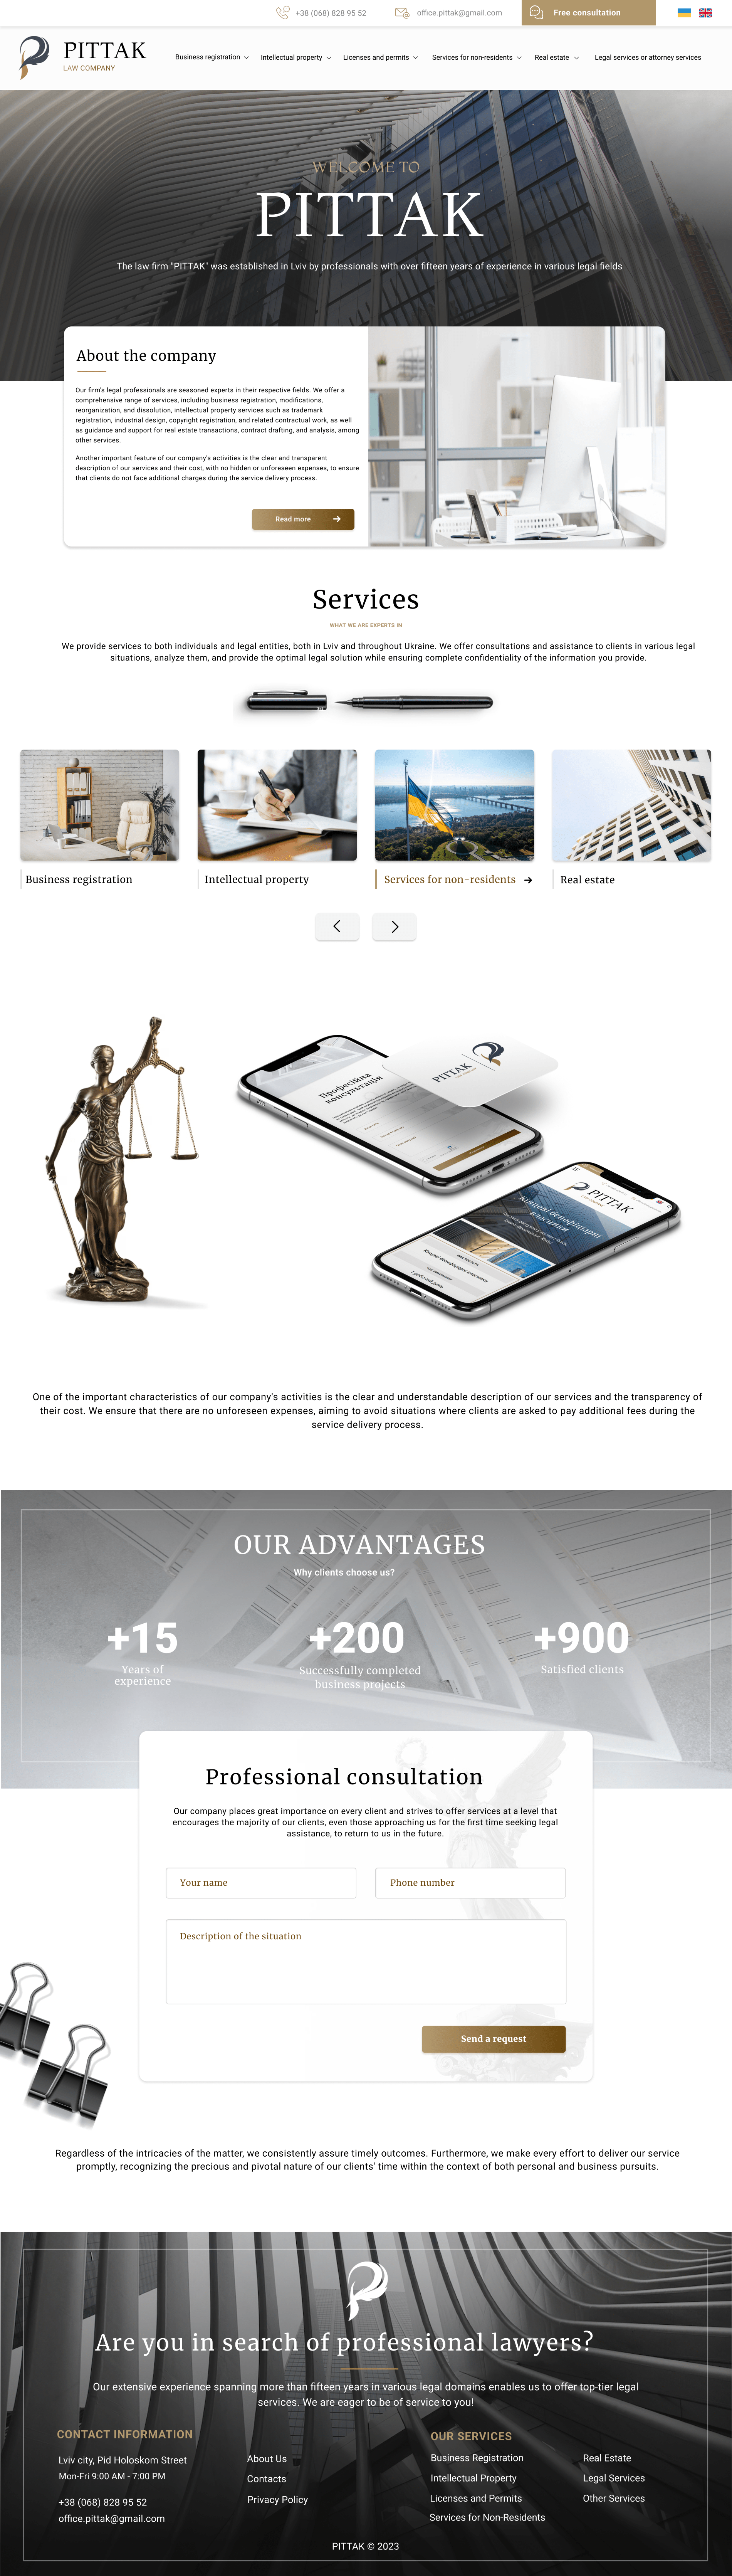 best law firm websites nashville. american freelance attorney websites